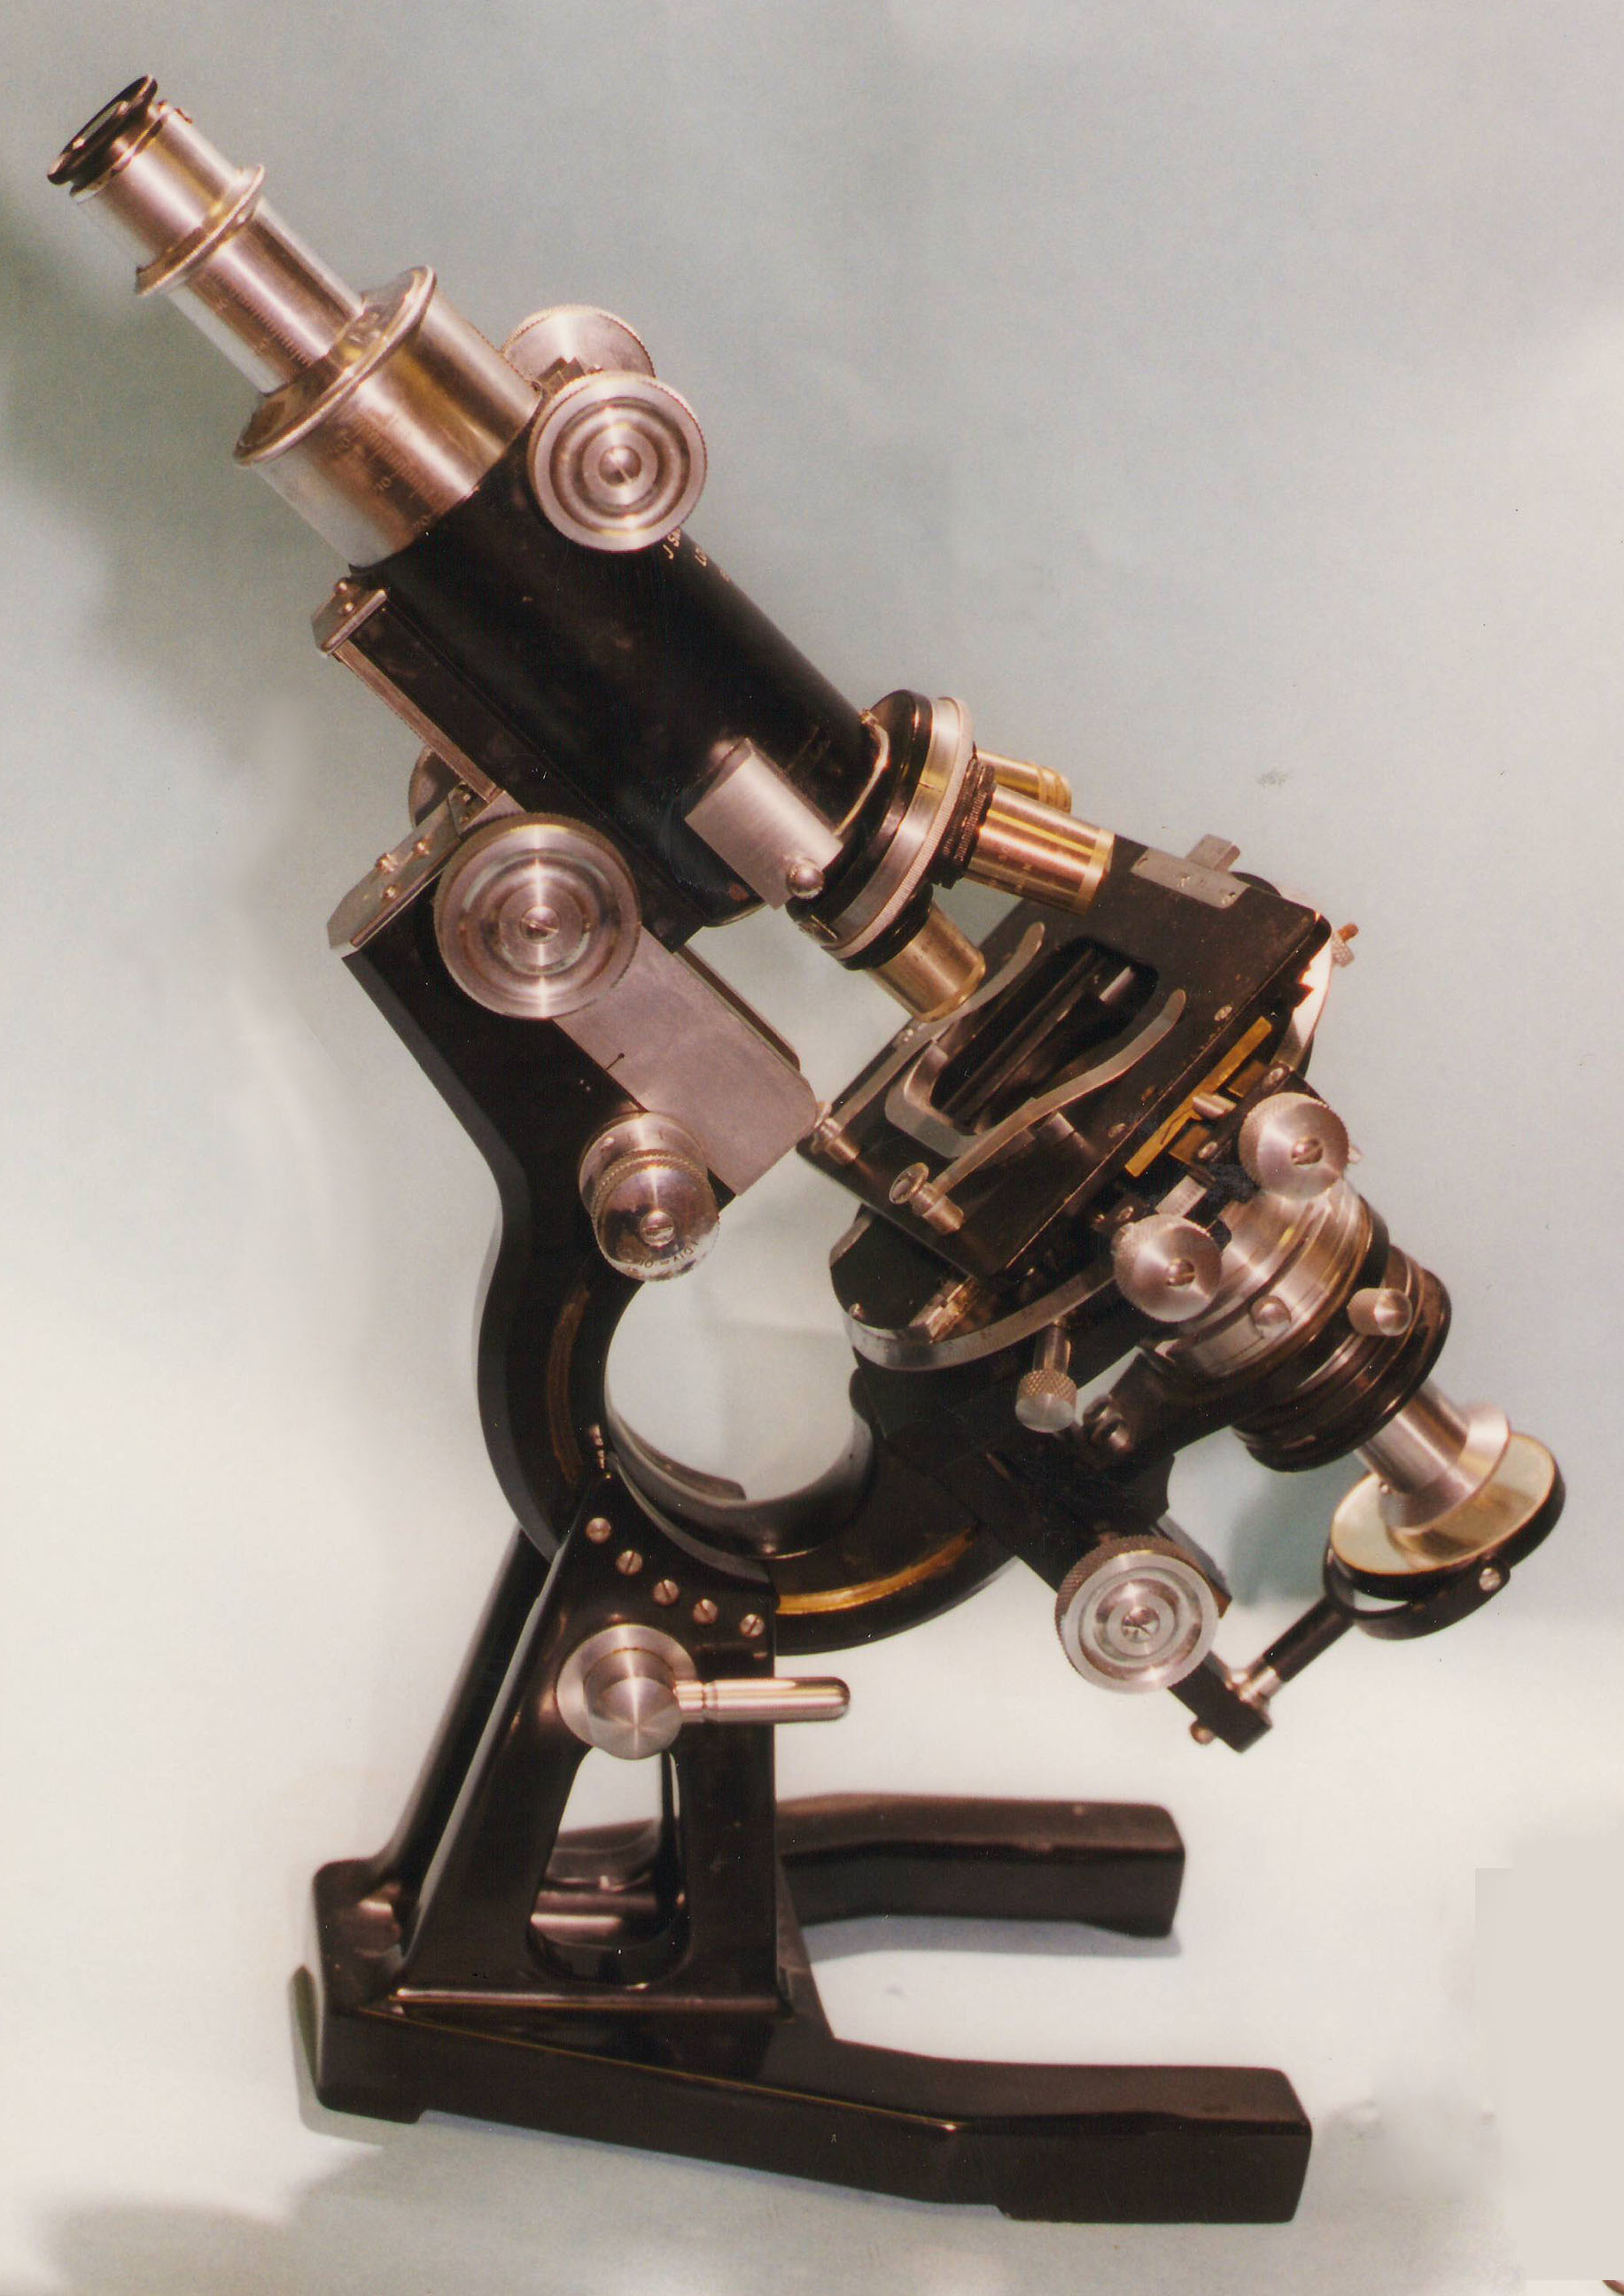 Swift Wales Microscope